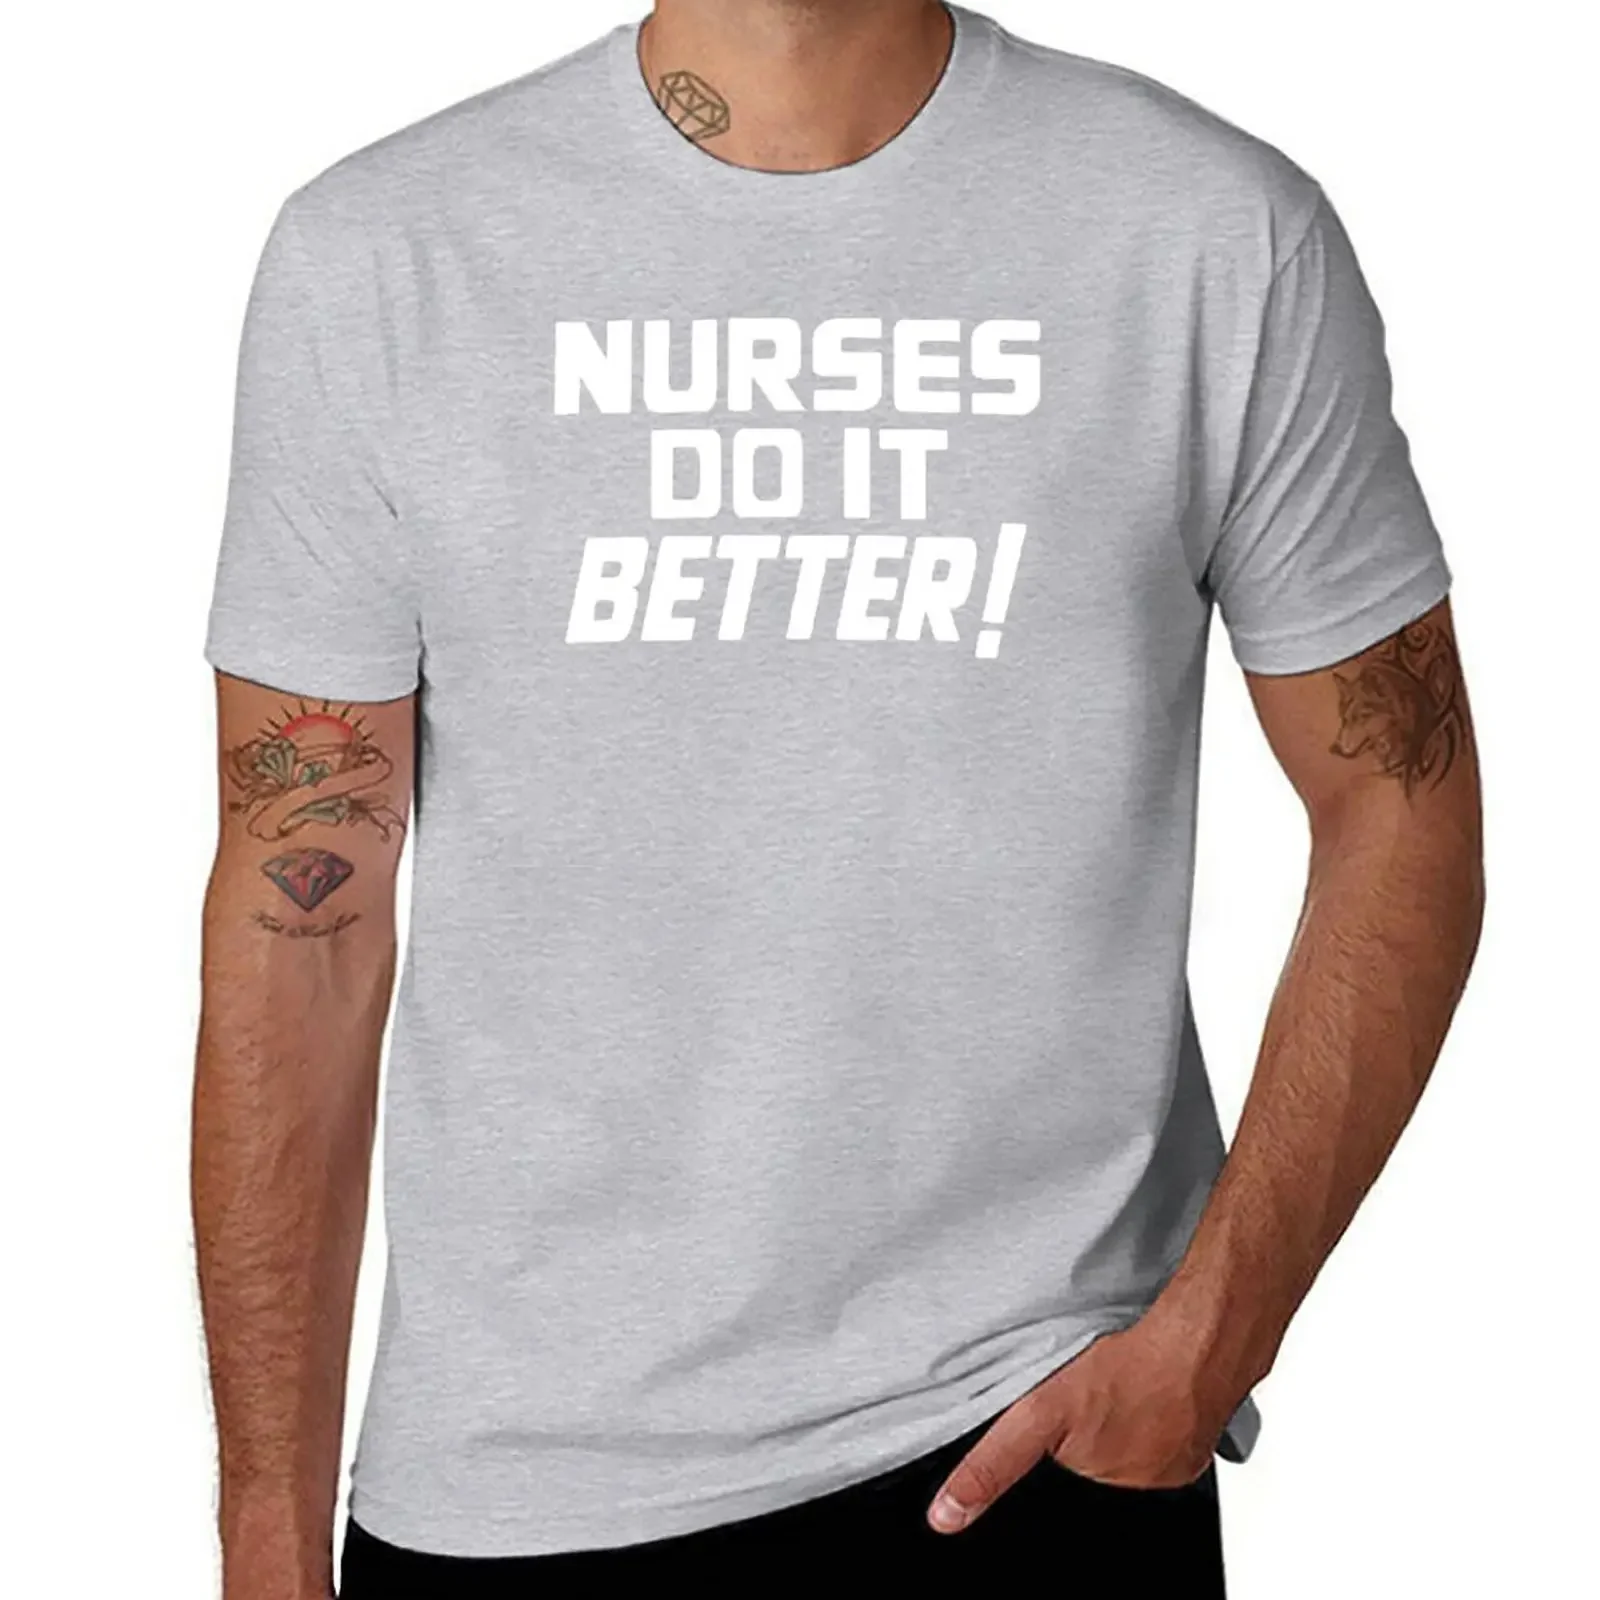 Nurses Love Rock N Roll Too T-Shirt plus size tops sports fans mens clothes